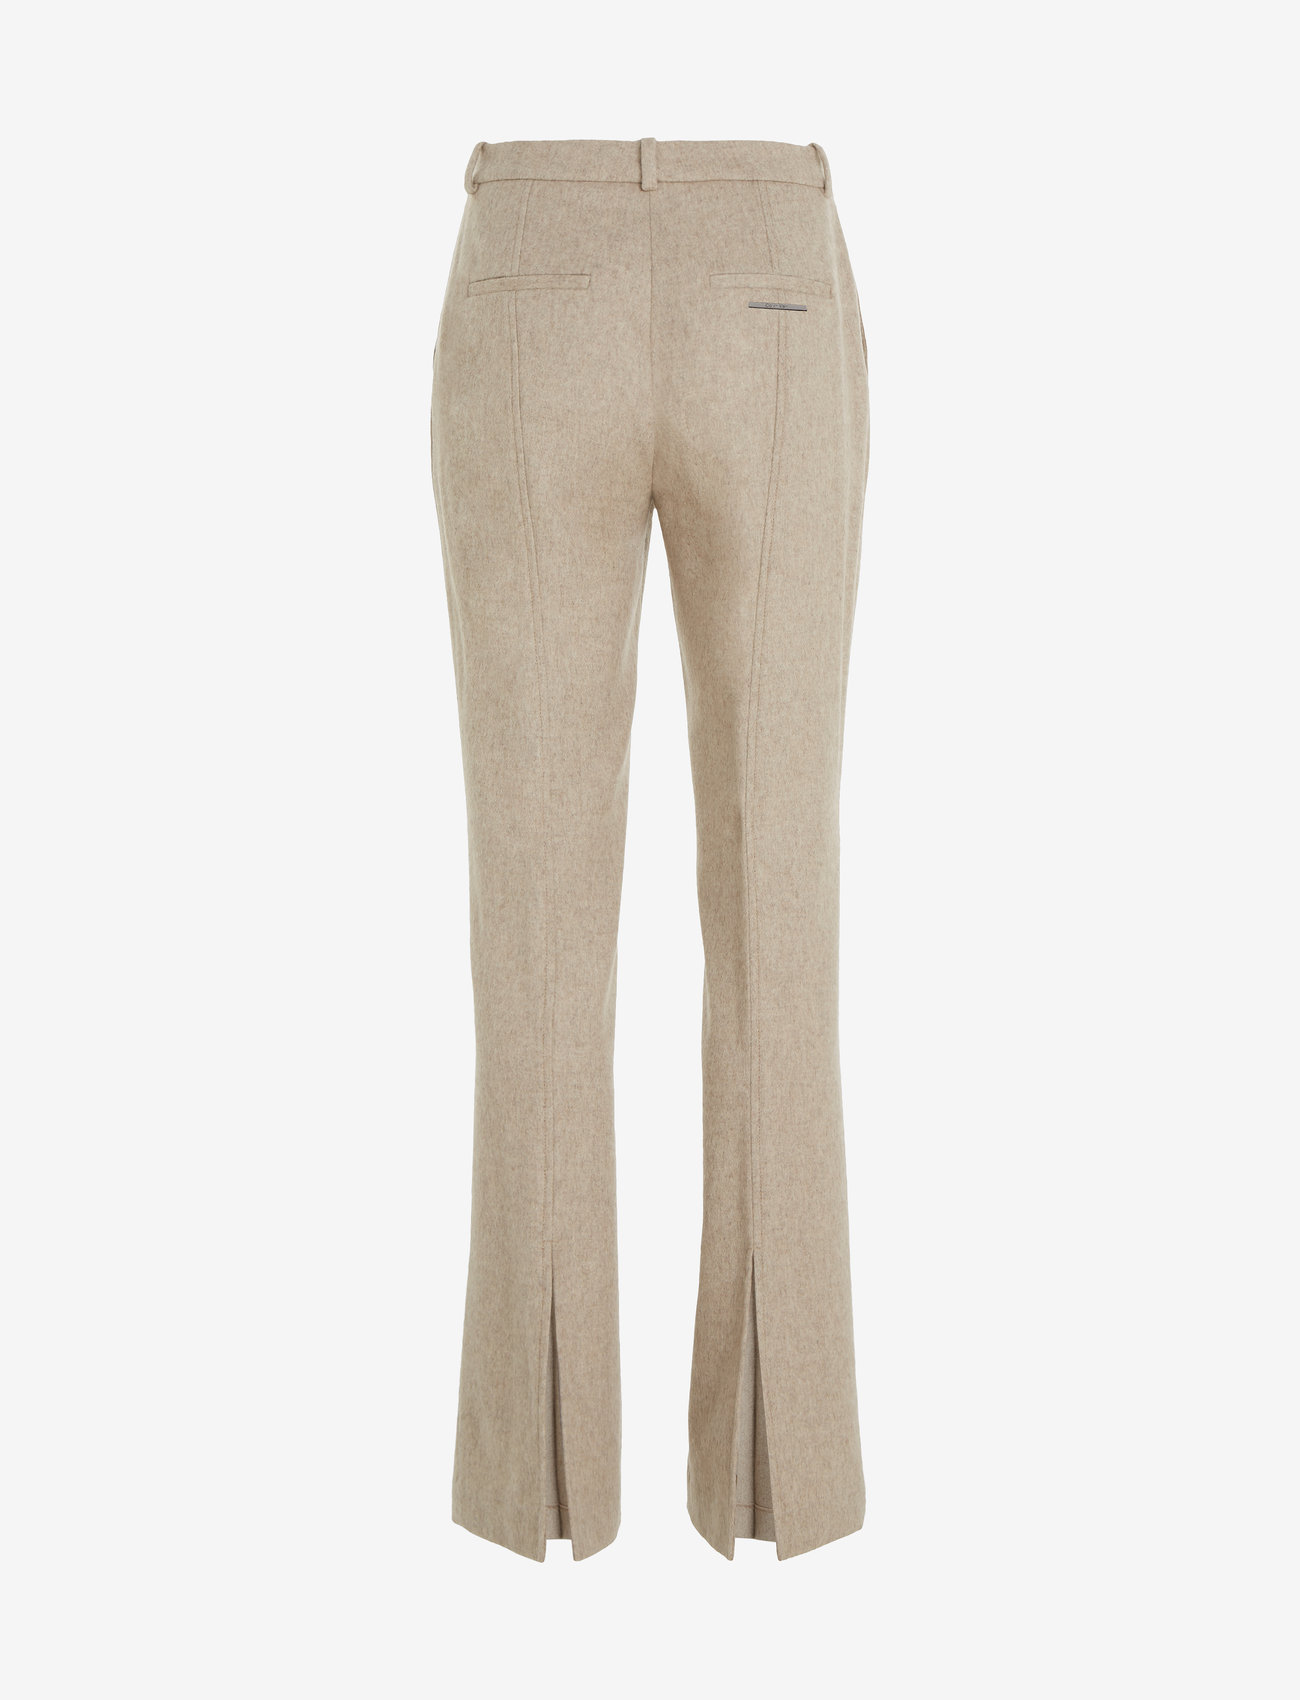 Calvin Klein - FLANNEL WOOL SLIM STRAIGHT PANTS - tiesaus kirpimo kelnės - doeskin heather - 1